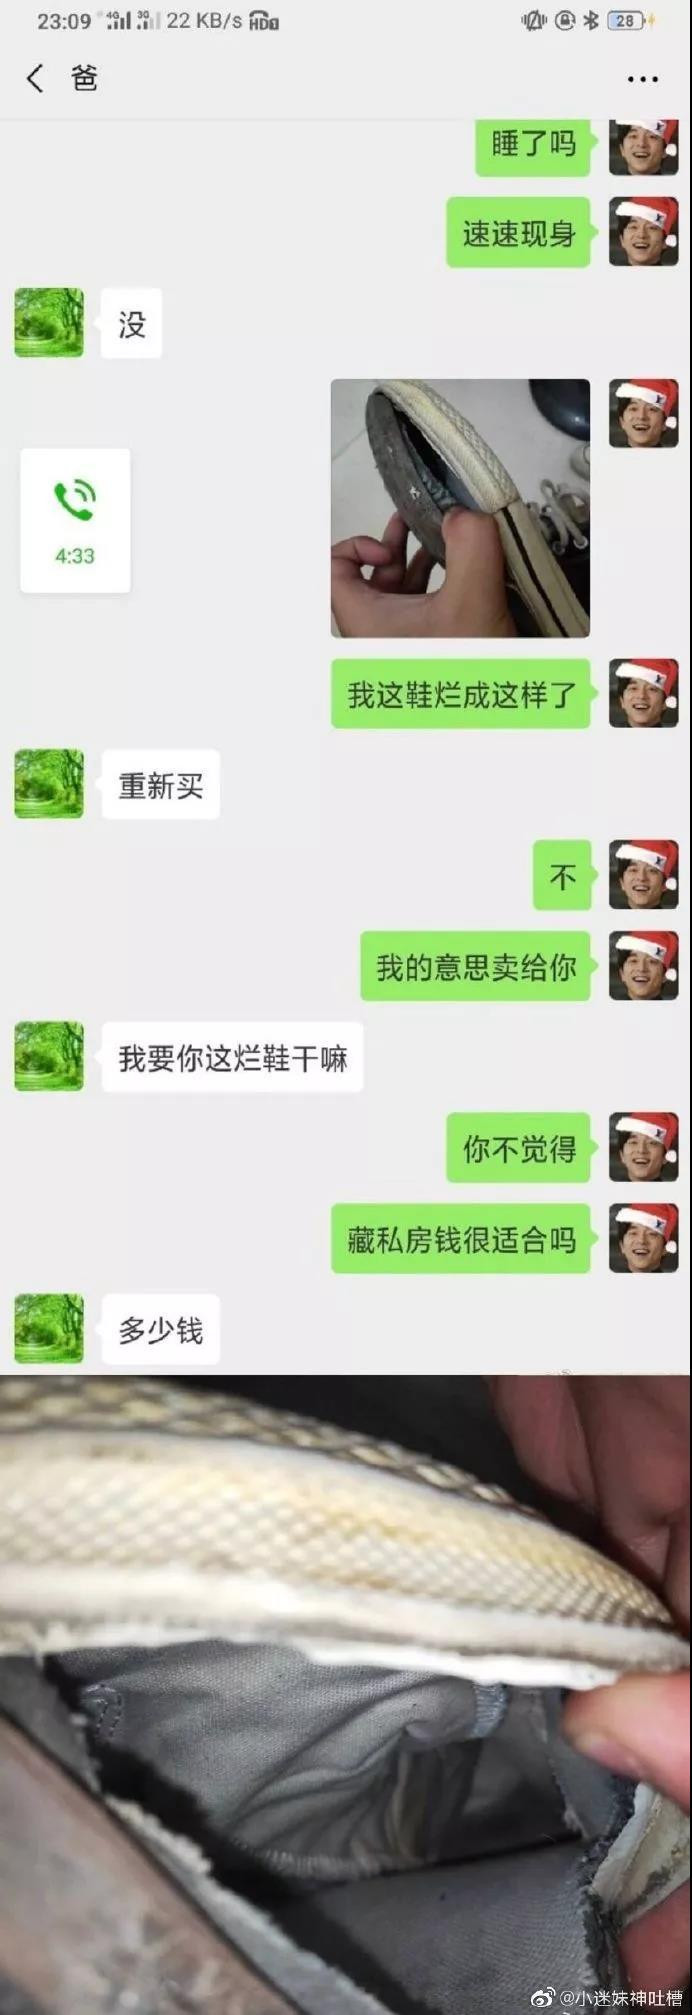 WeChat Image 20191111190754